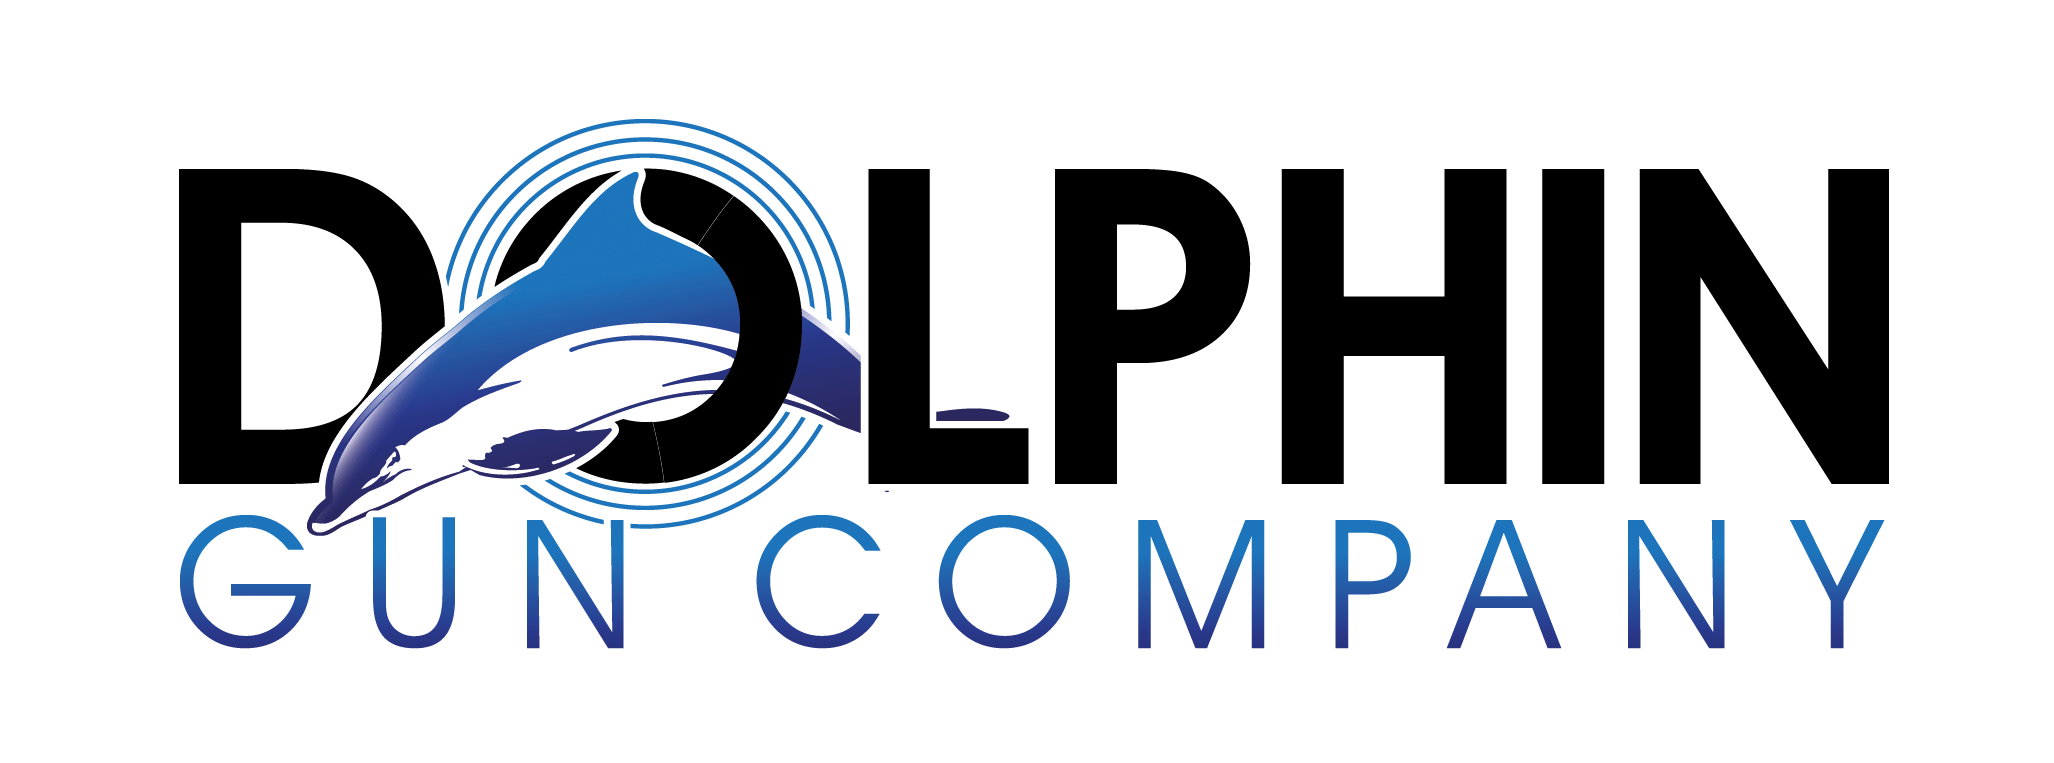 Gun Company Logo - Dolphin Gun Company